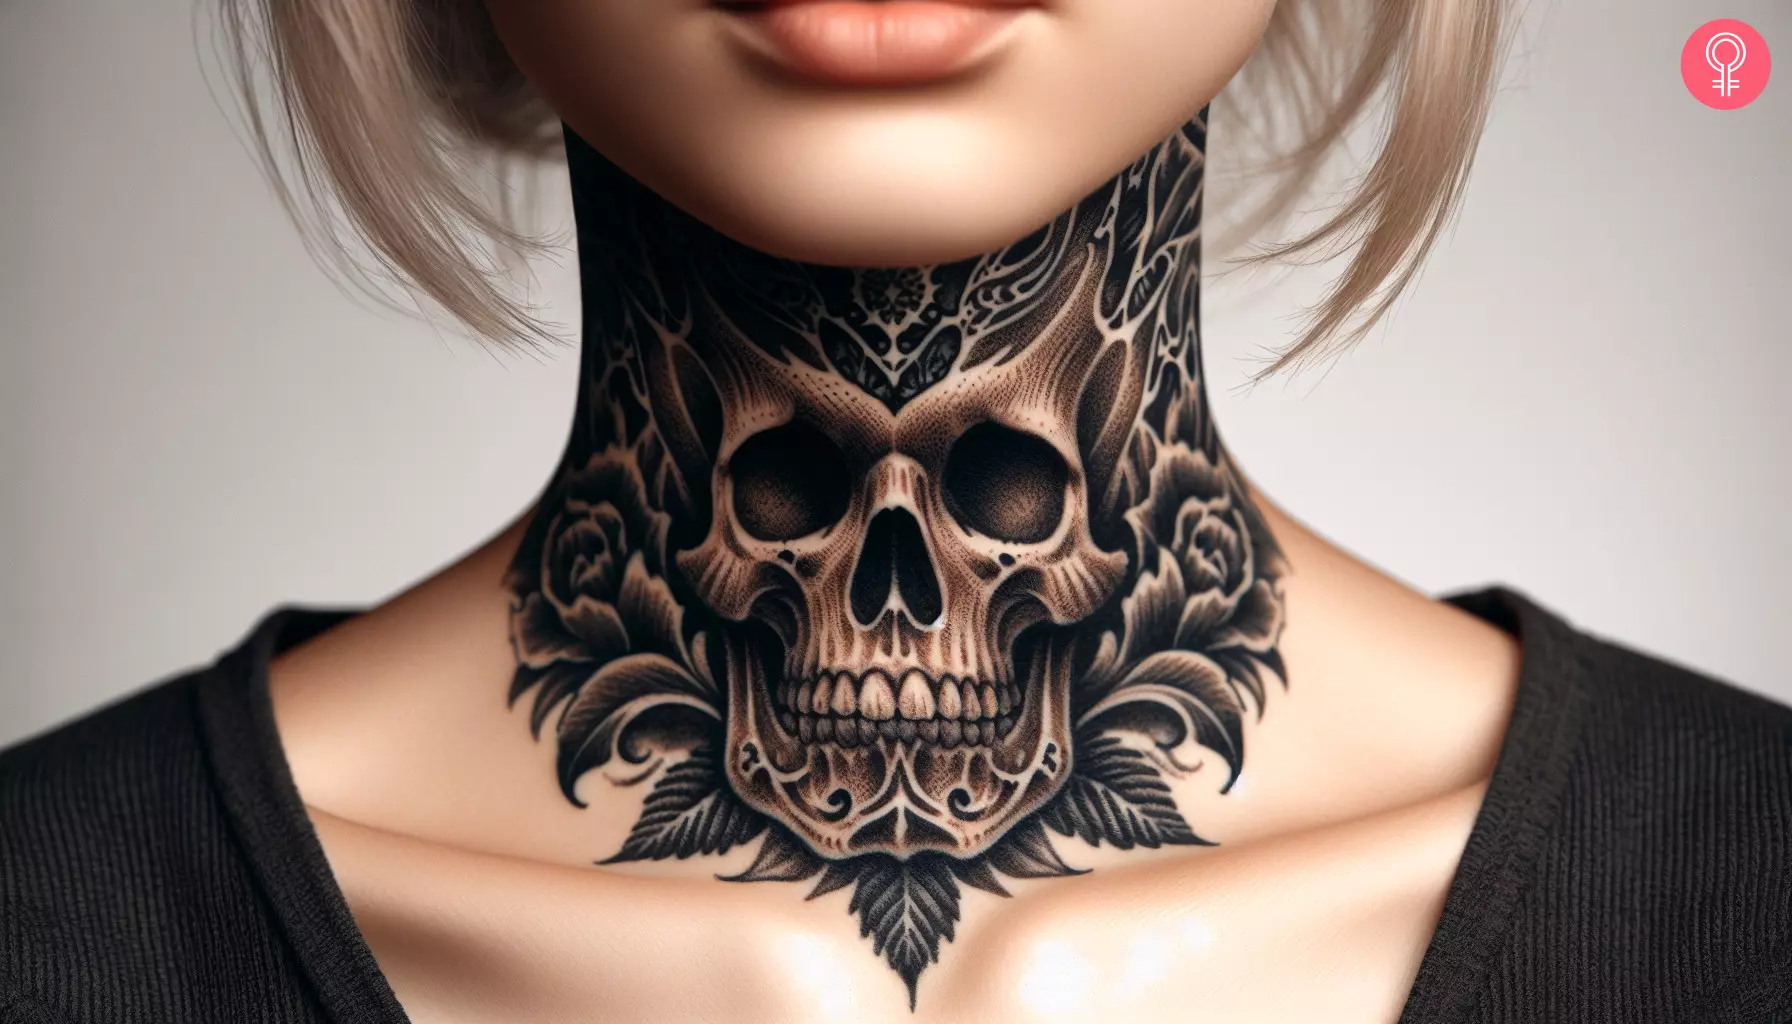 Woman with skull throat tattoo